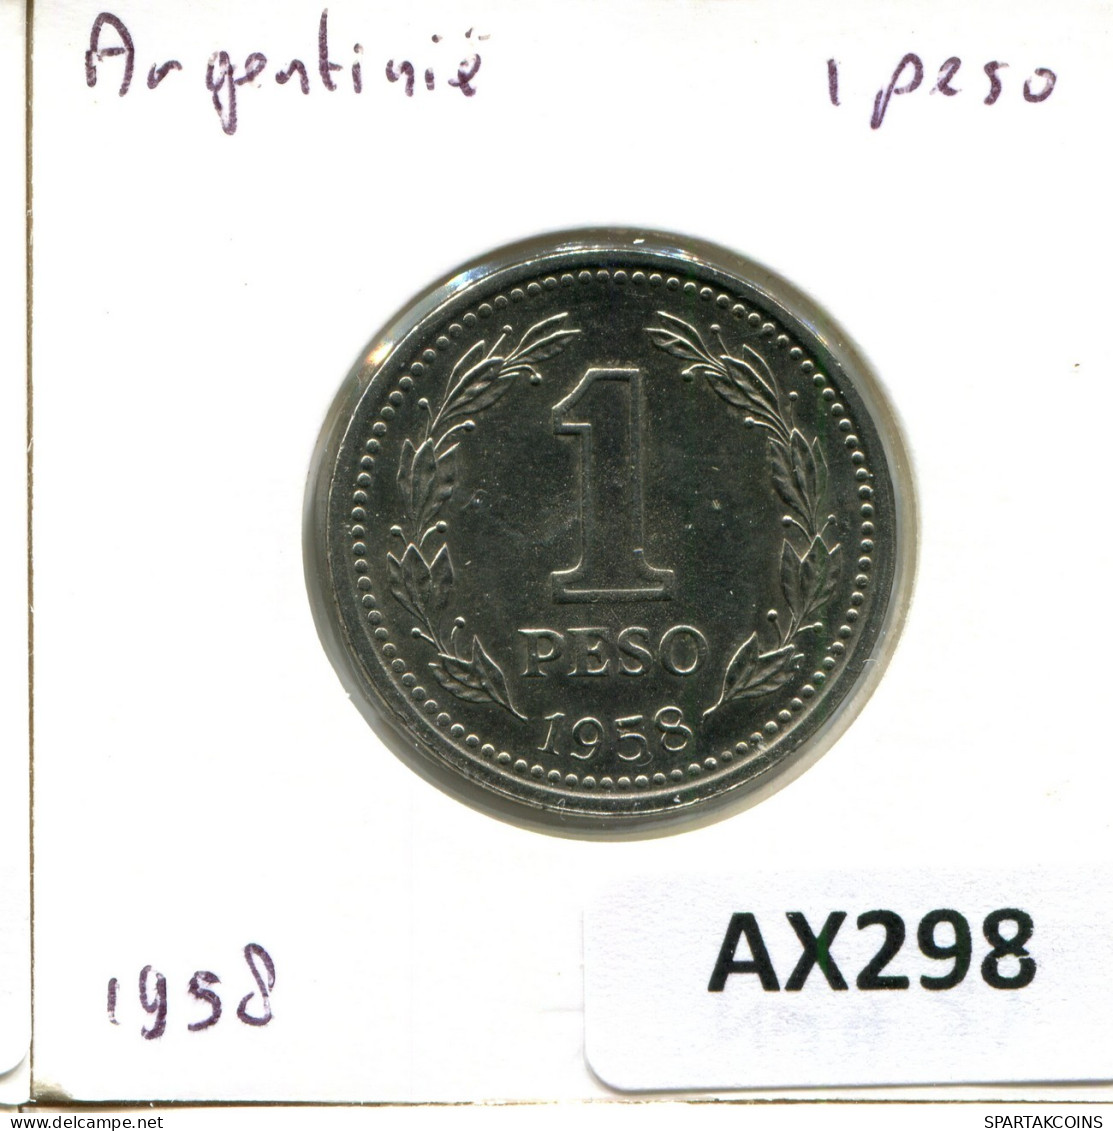 1 PESO 1958 ARGENTINA Coin #AX298.U.A - Argentina